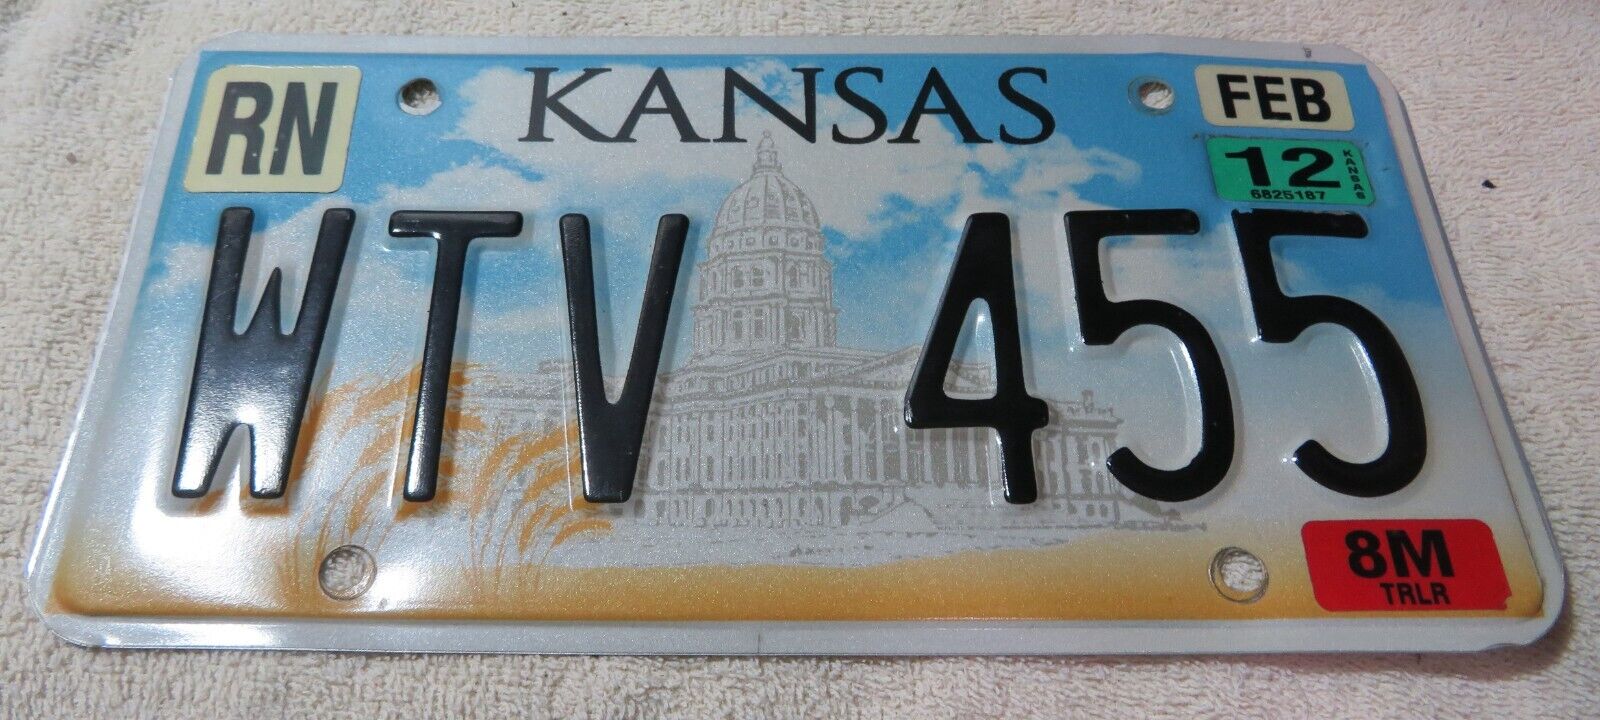  8M Trailer 2012 Kansas Reno County license Plate RN WTV 455 